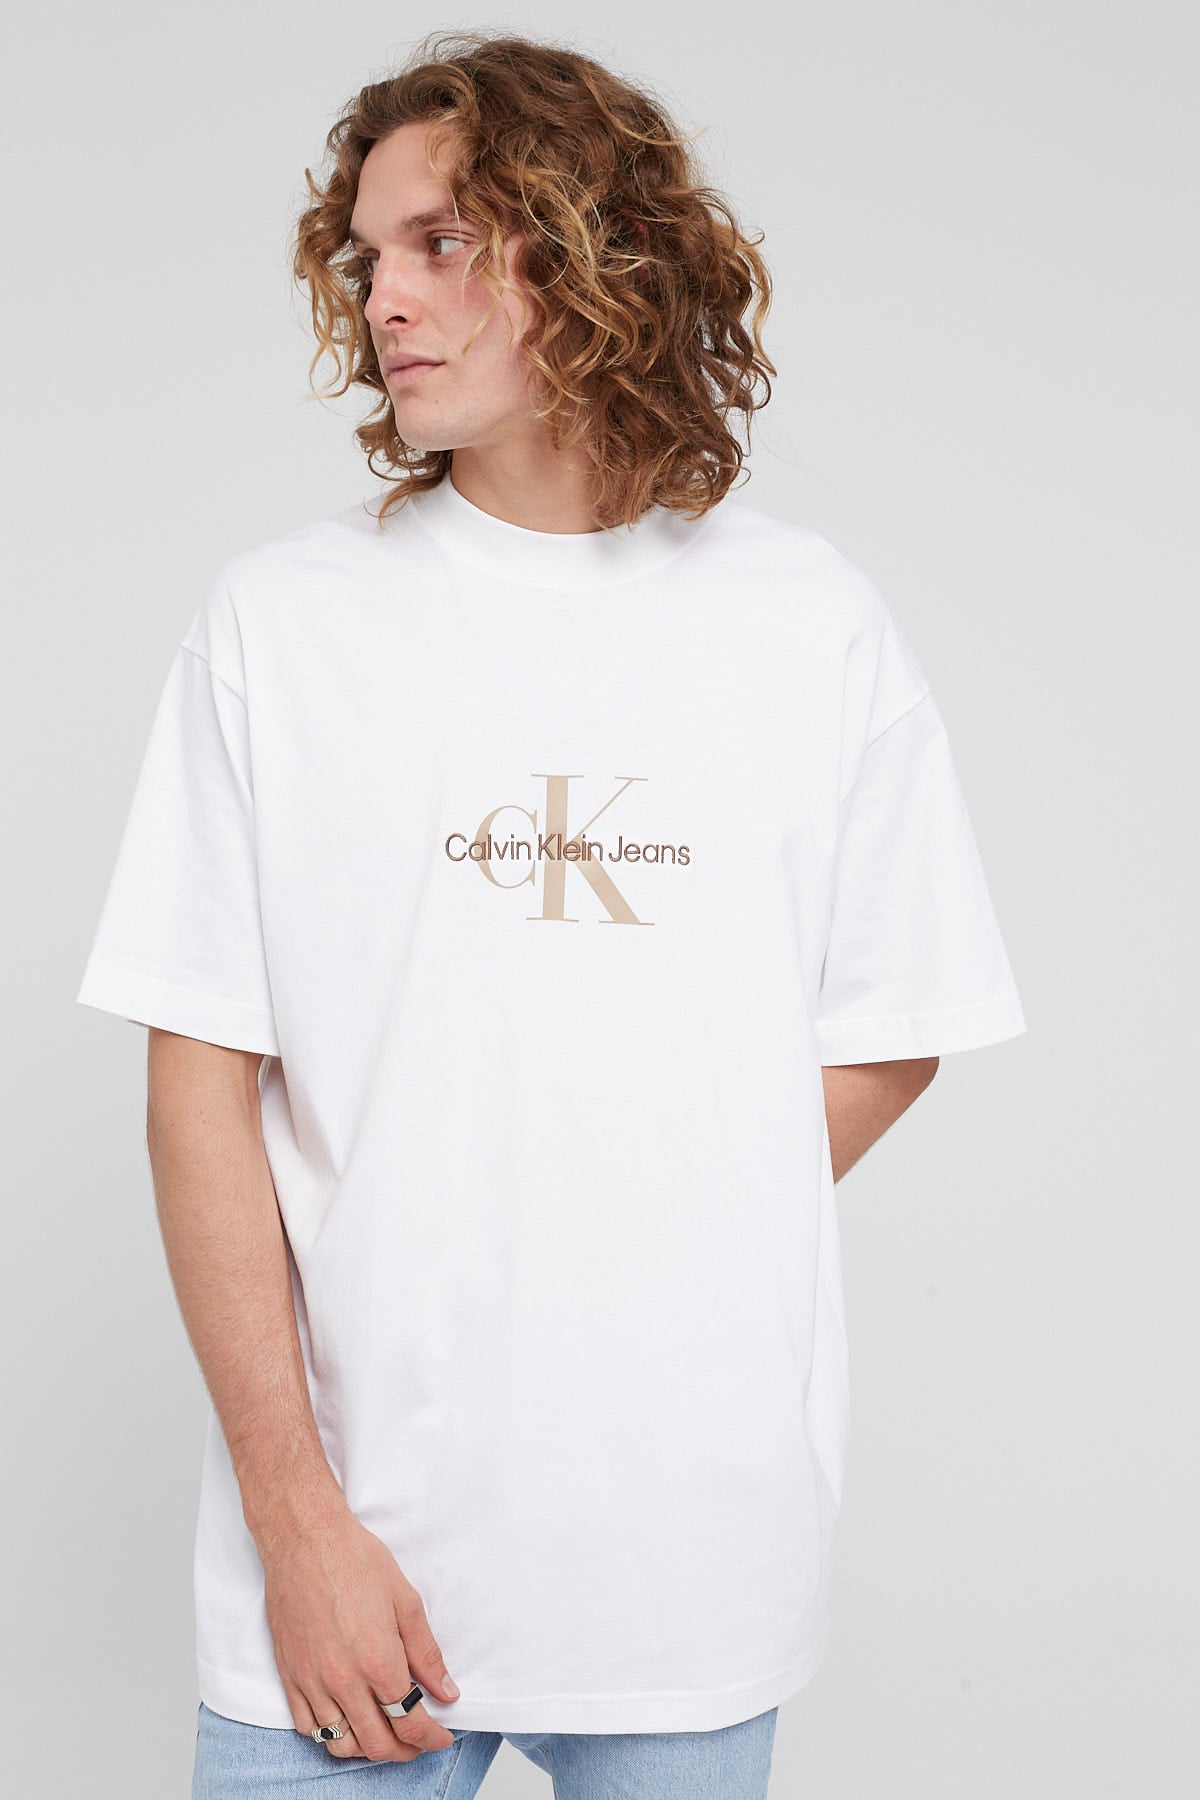 Calvin Klein Store Monogram Tee CK – Bright White Universal